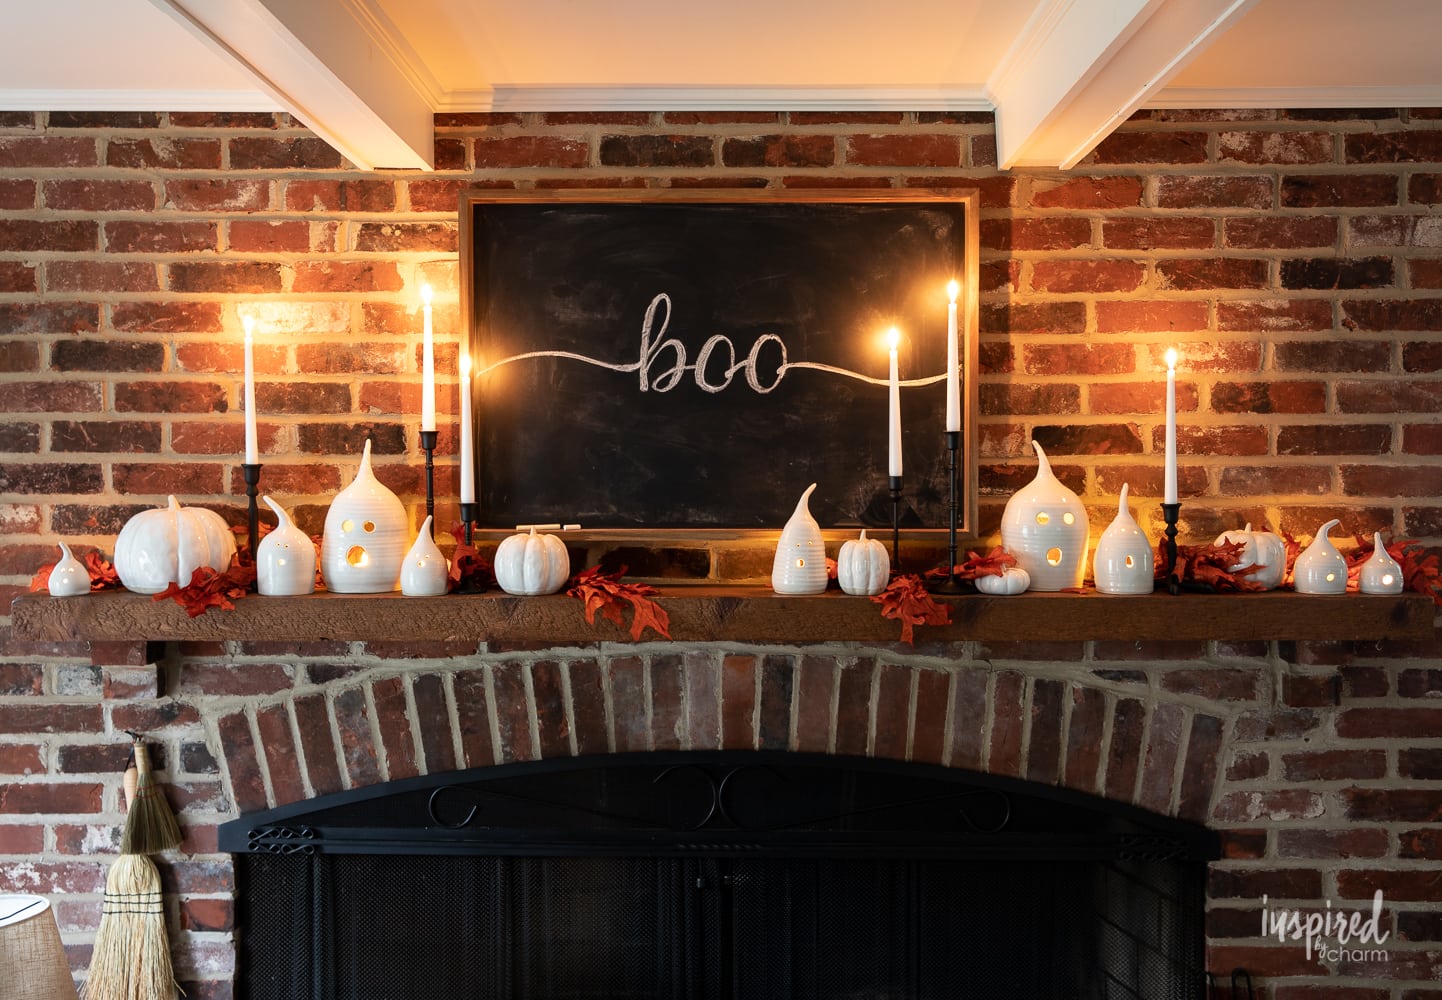 Boo-tiful Halloween Mantel Decor #halloween #mantel #decor #decorating #spooky #chic #ghosts #candles